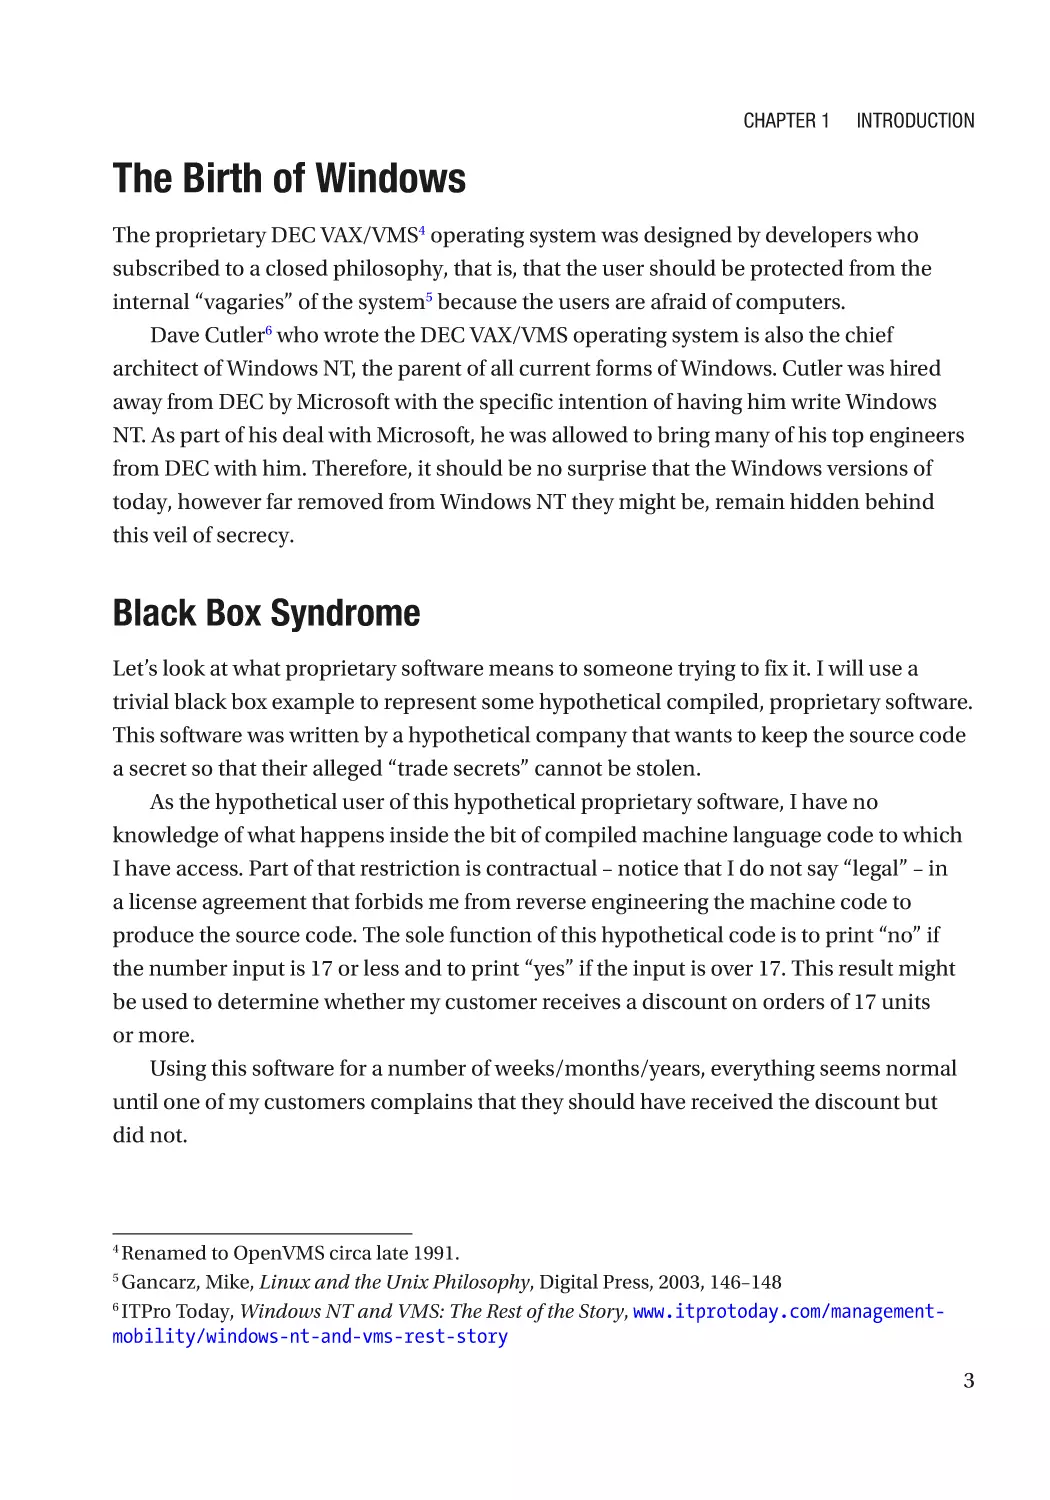 The Birth of Windows
Black Box Syndrome